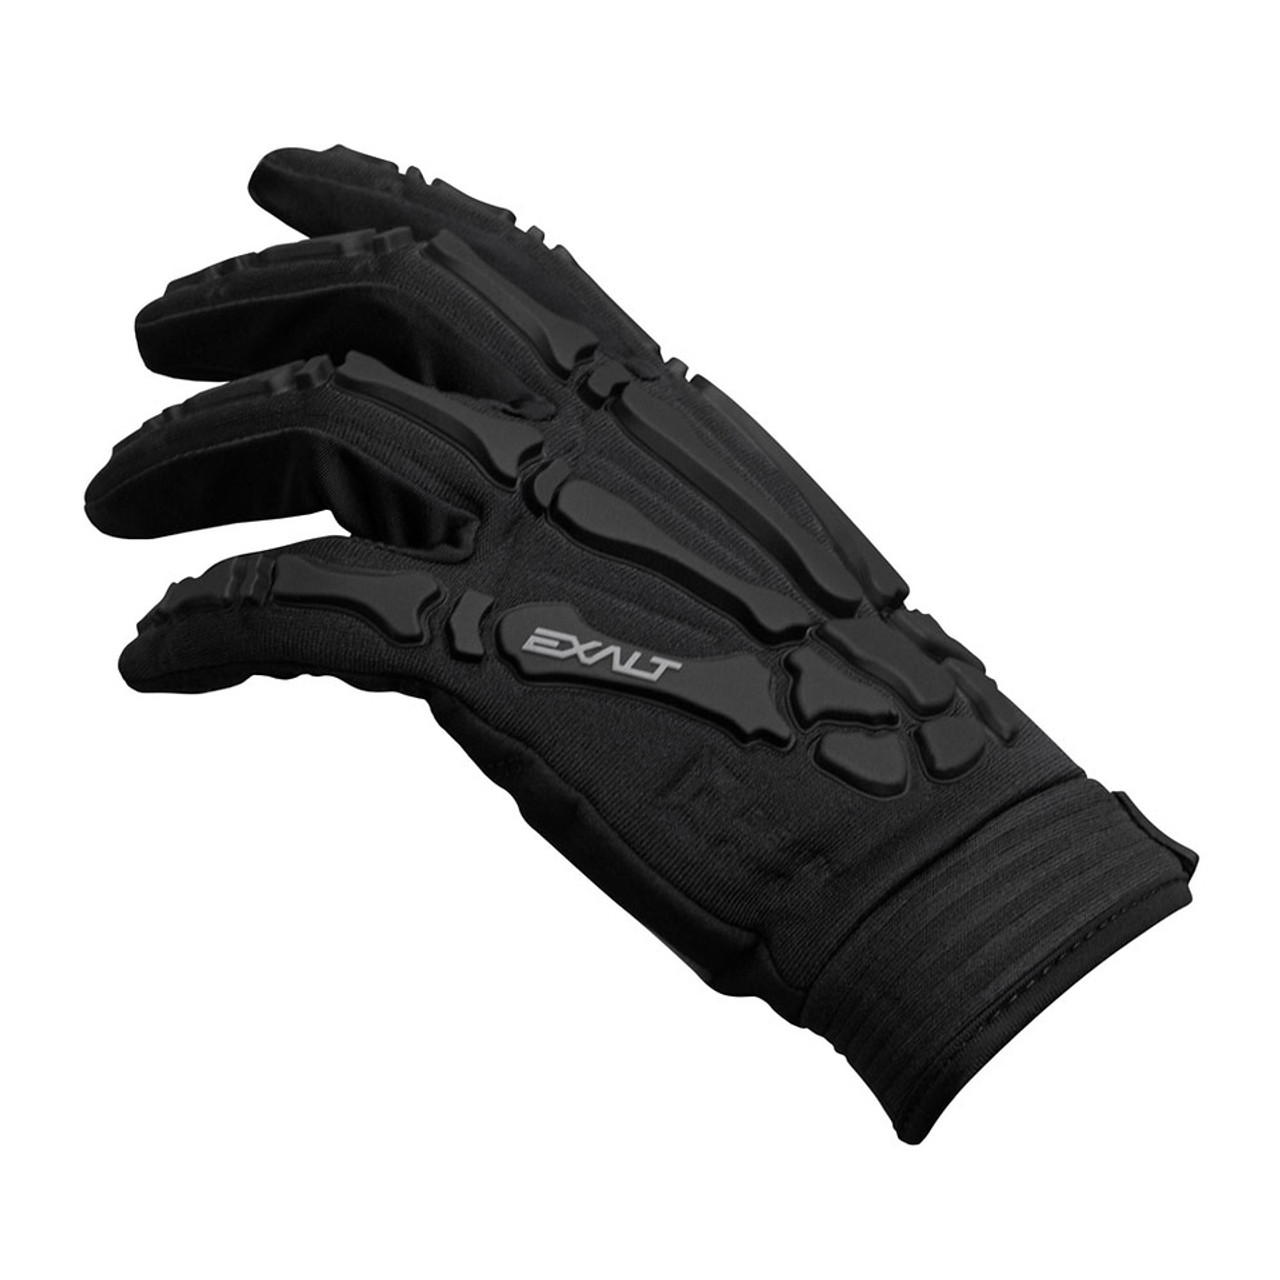 DECKHAND Junior Glove / long fingers / black only 29,95 €